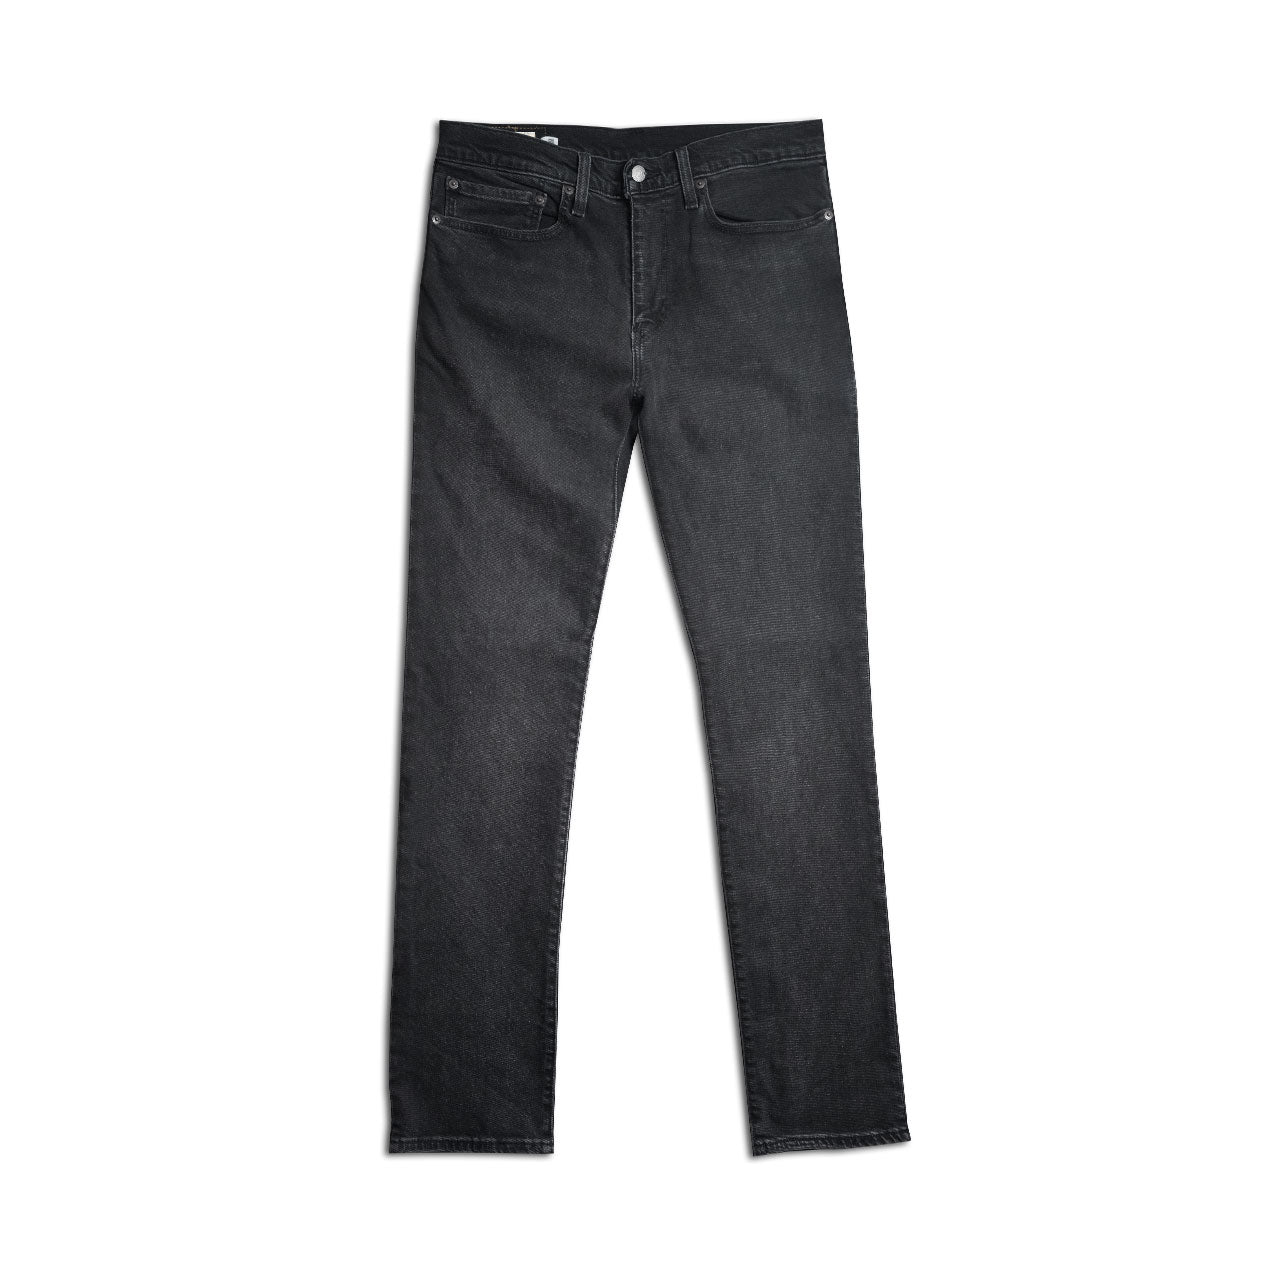 Levi's Premium 511 schwarze Rinse-Jeans